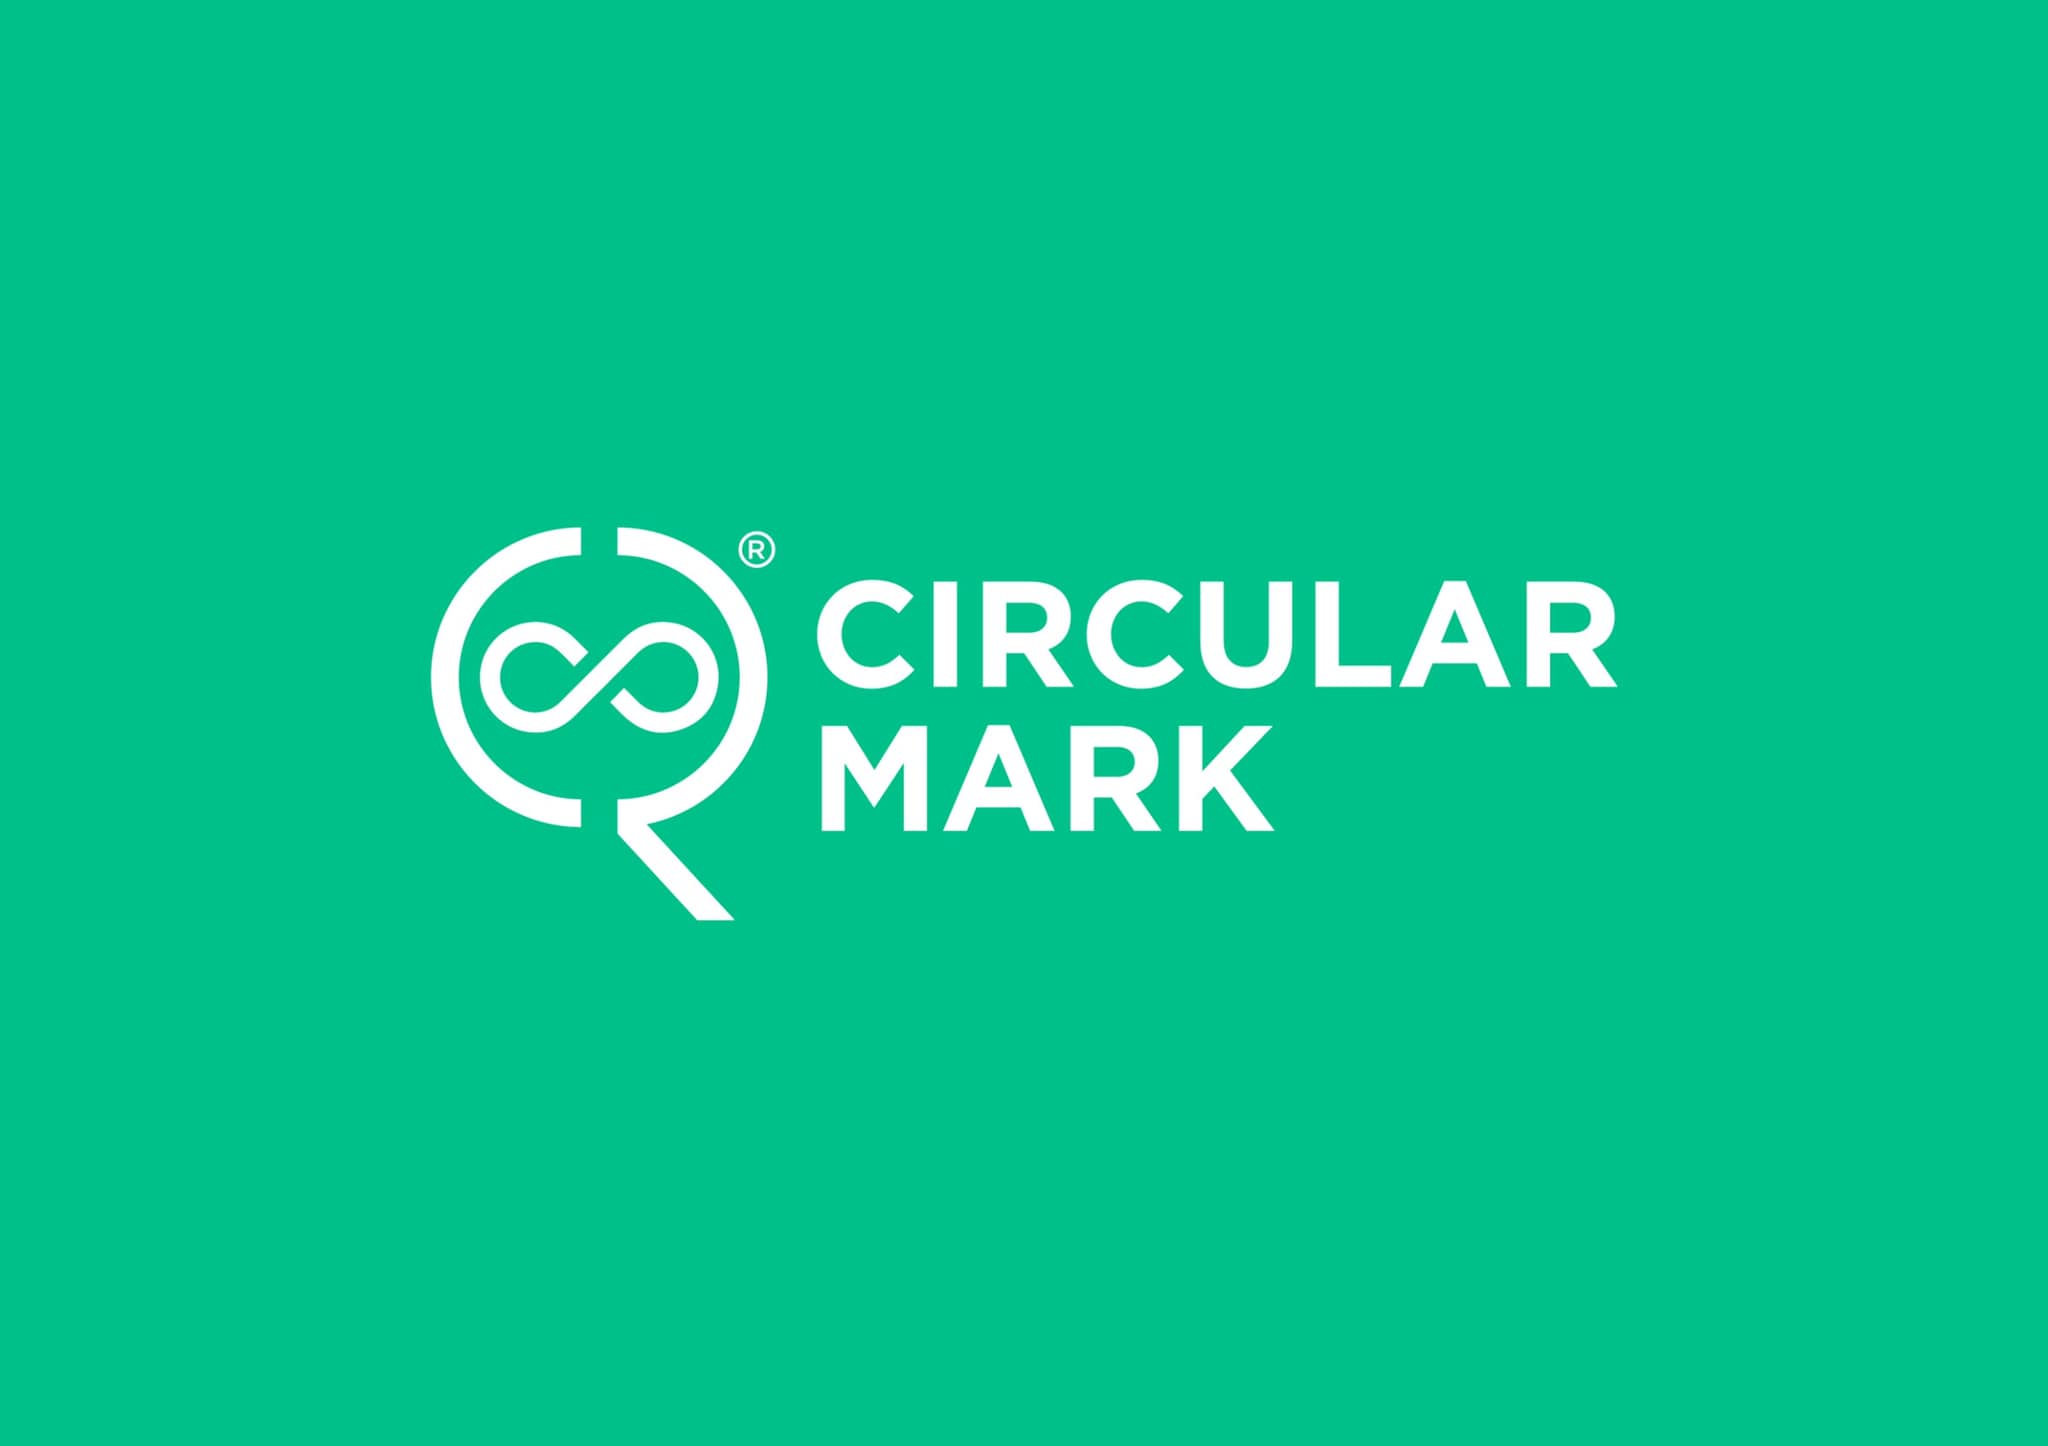 Circular mark